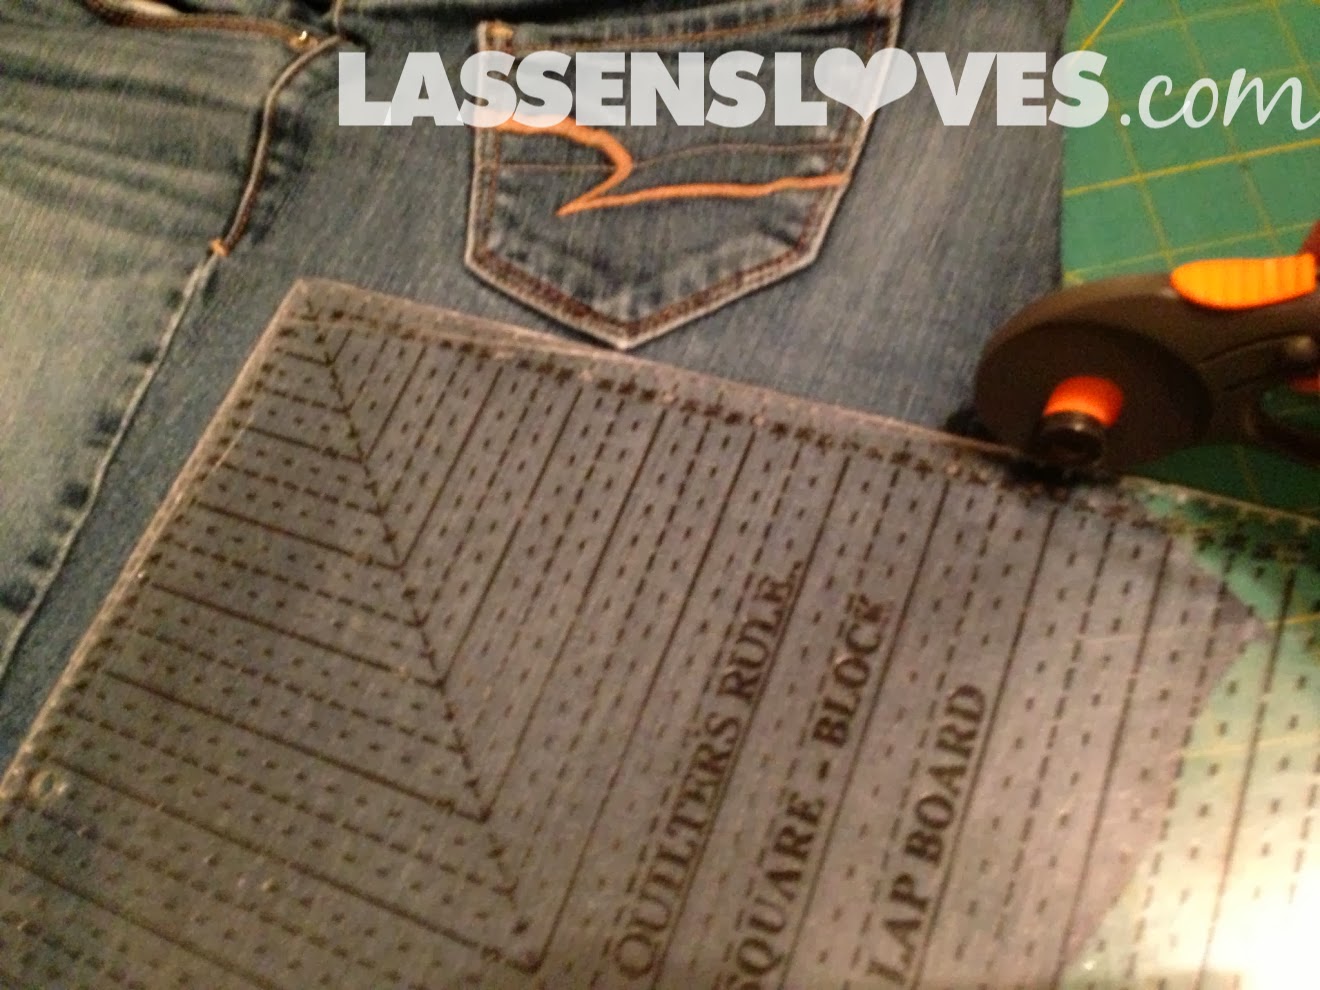 lassensloves.com, Lassen's, Lassens, jeans+blanket, denim+blanket, up+cycle